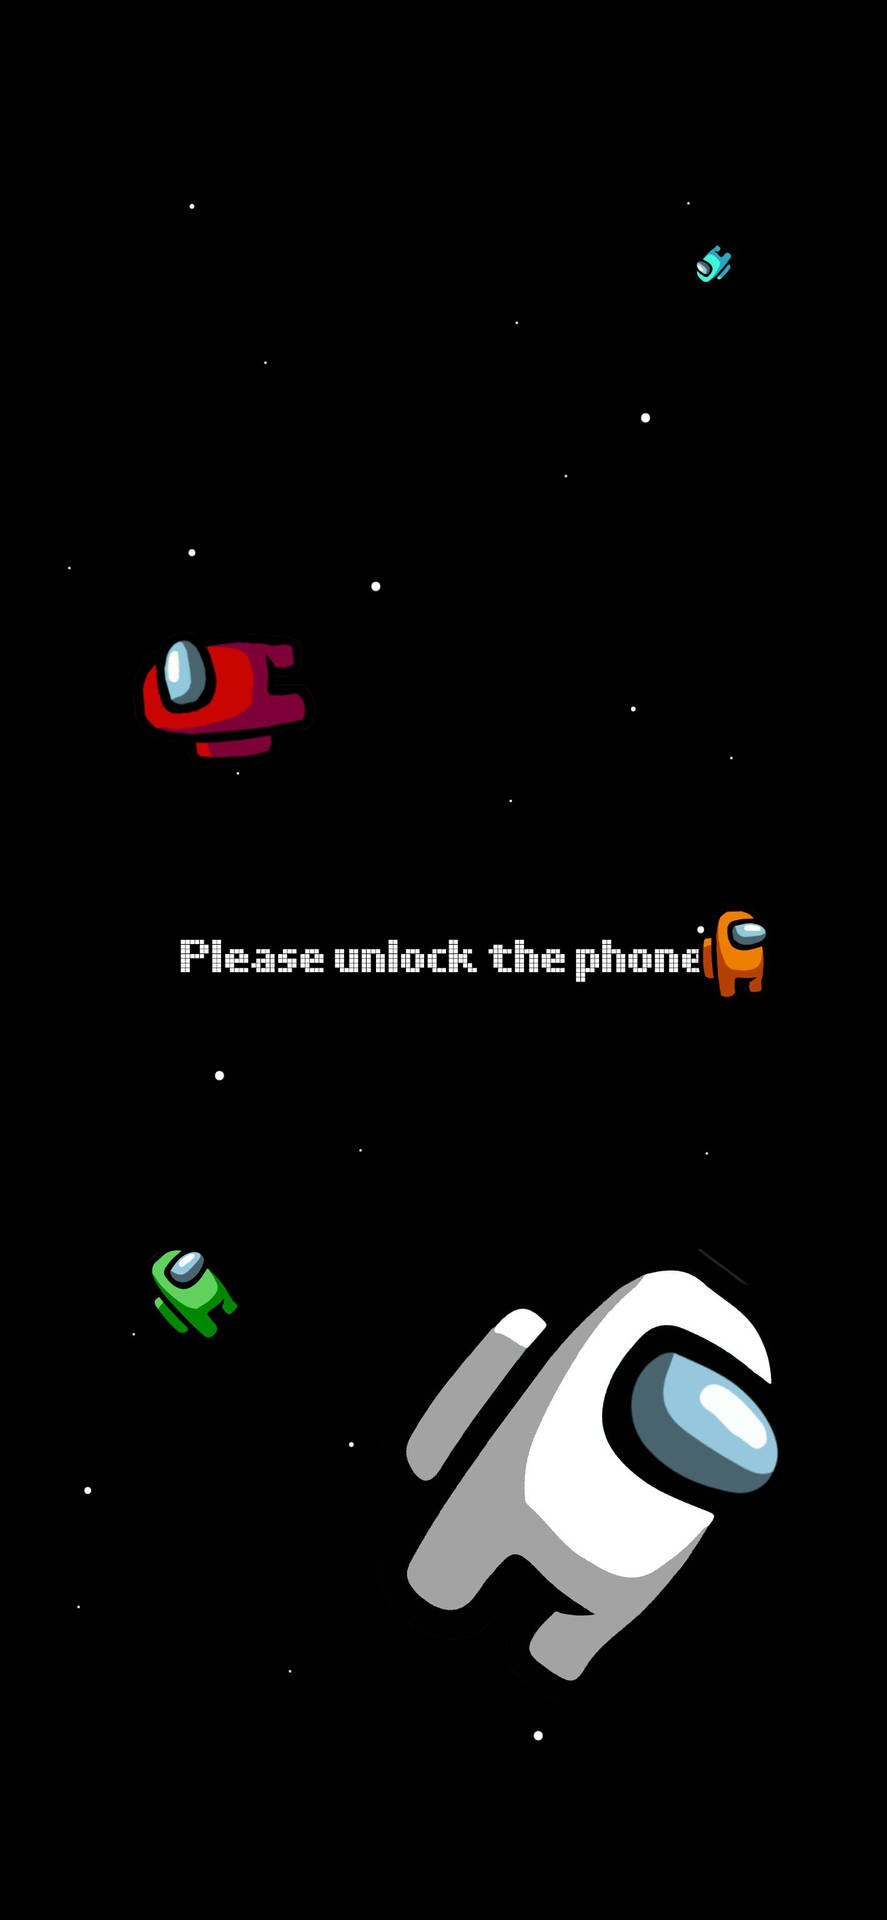 Unlock The Phone Among Us Iphone Background